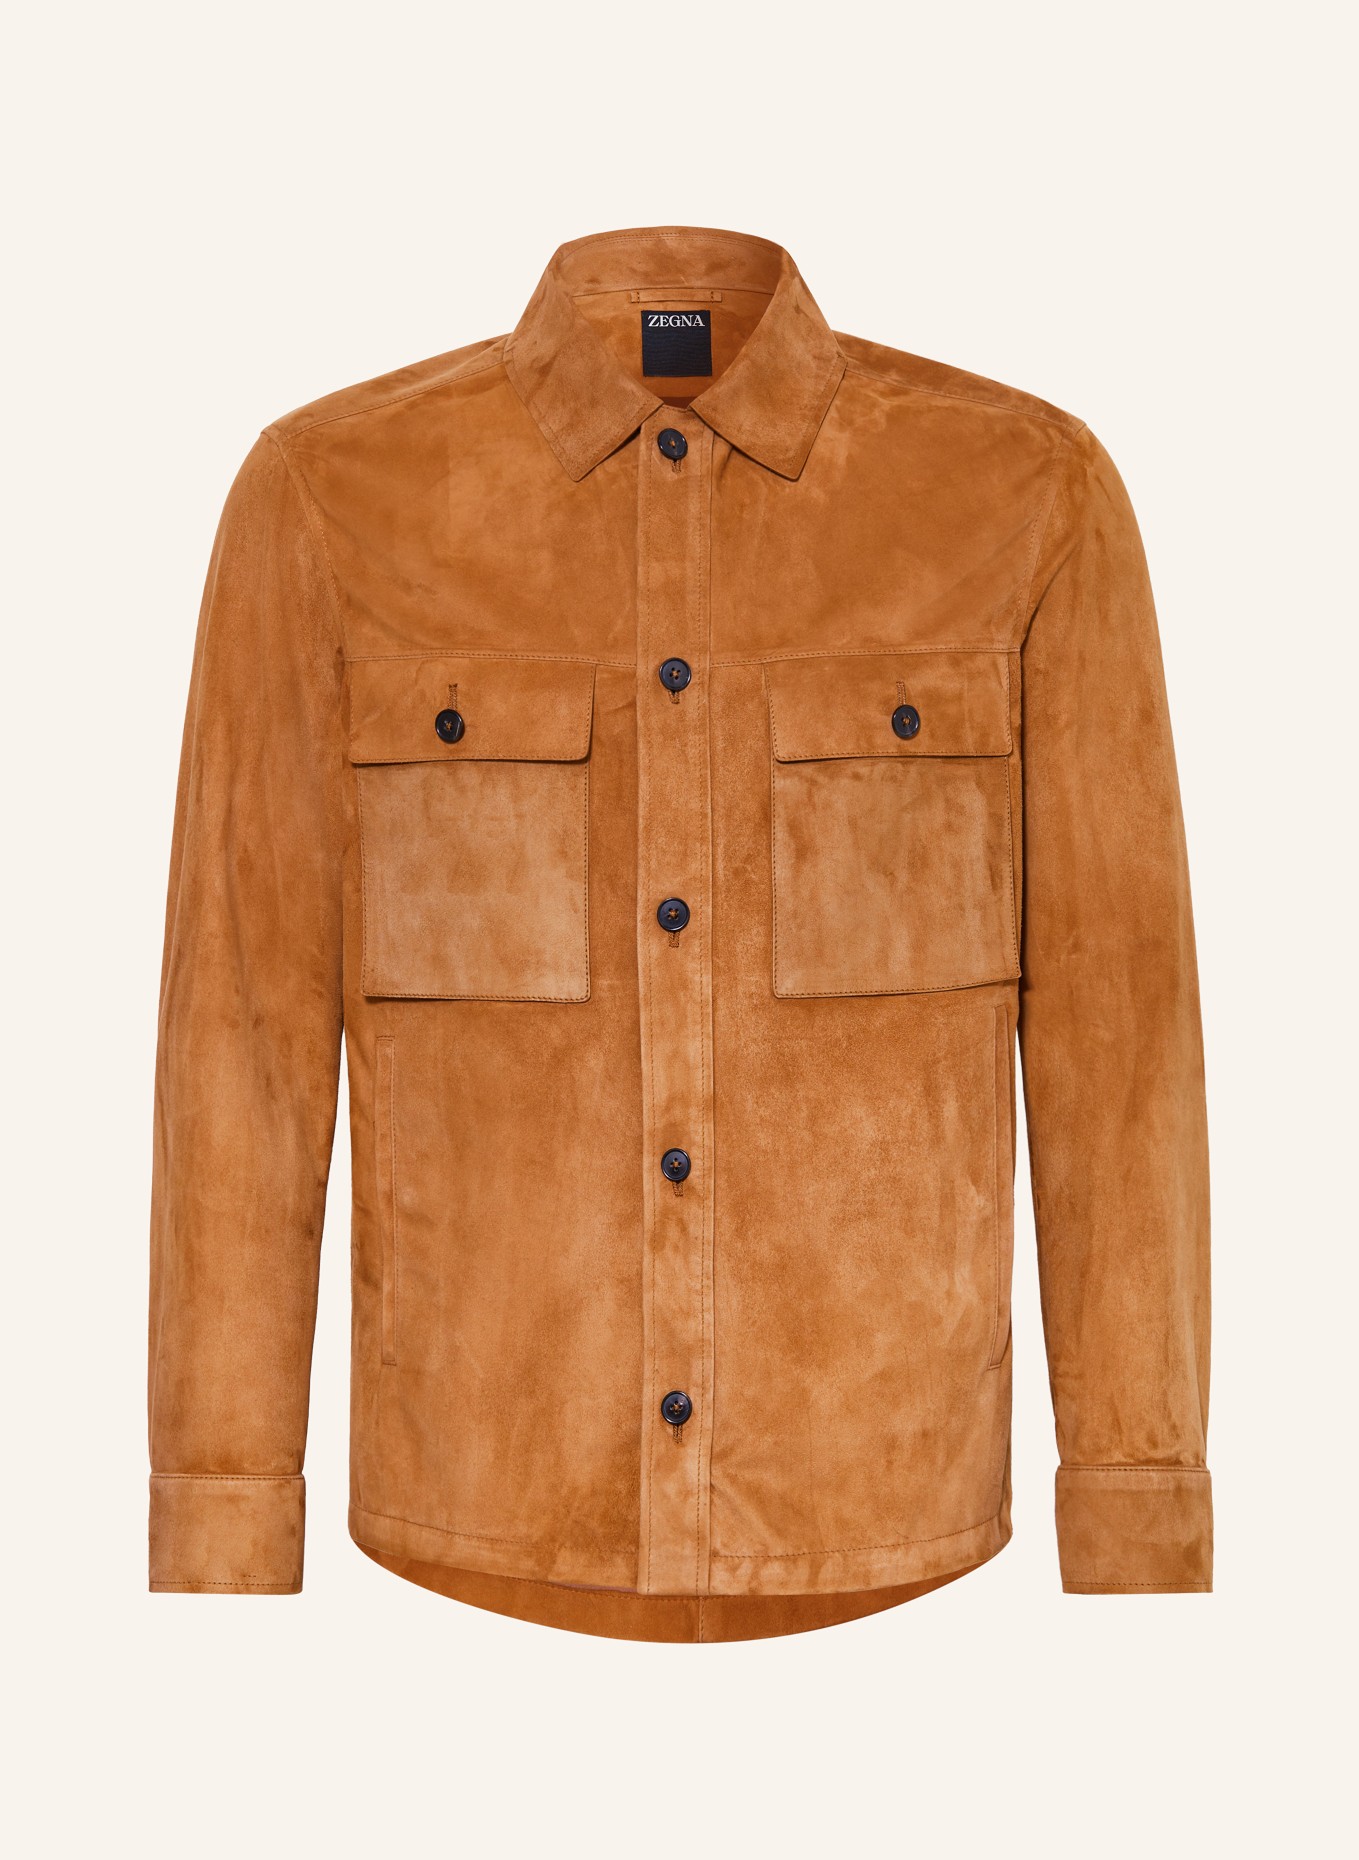 ZEGNA Leather overshirt, Color: COGNAC (Image 1)